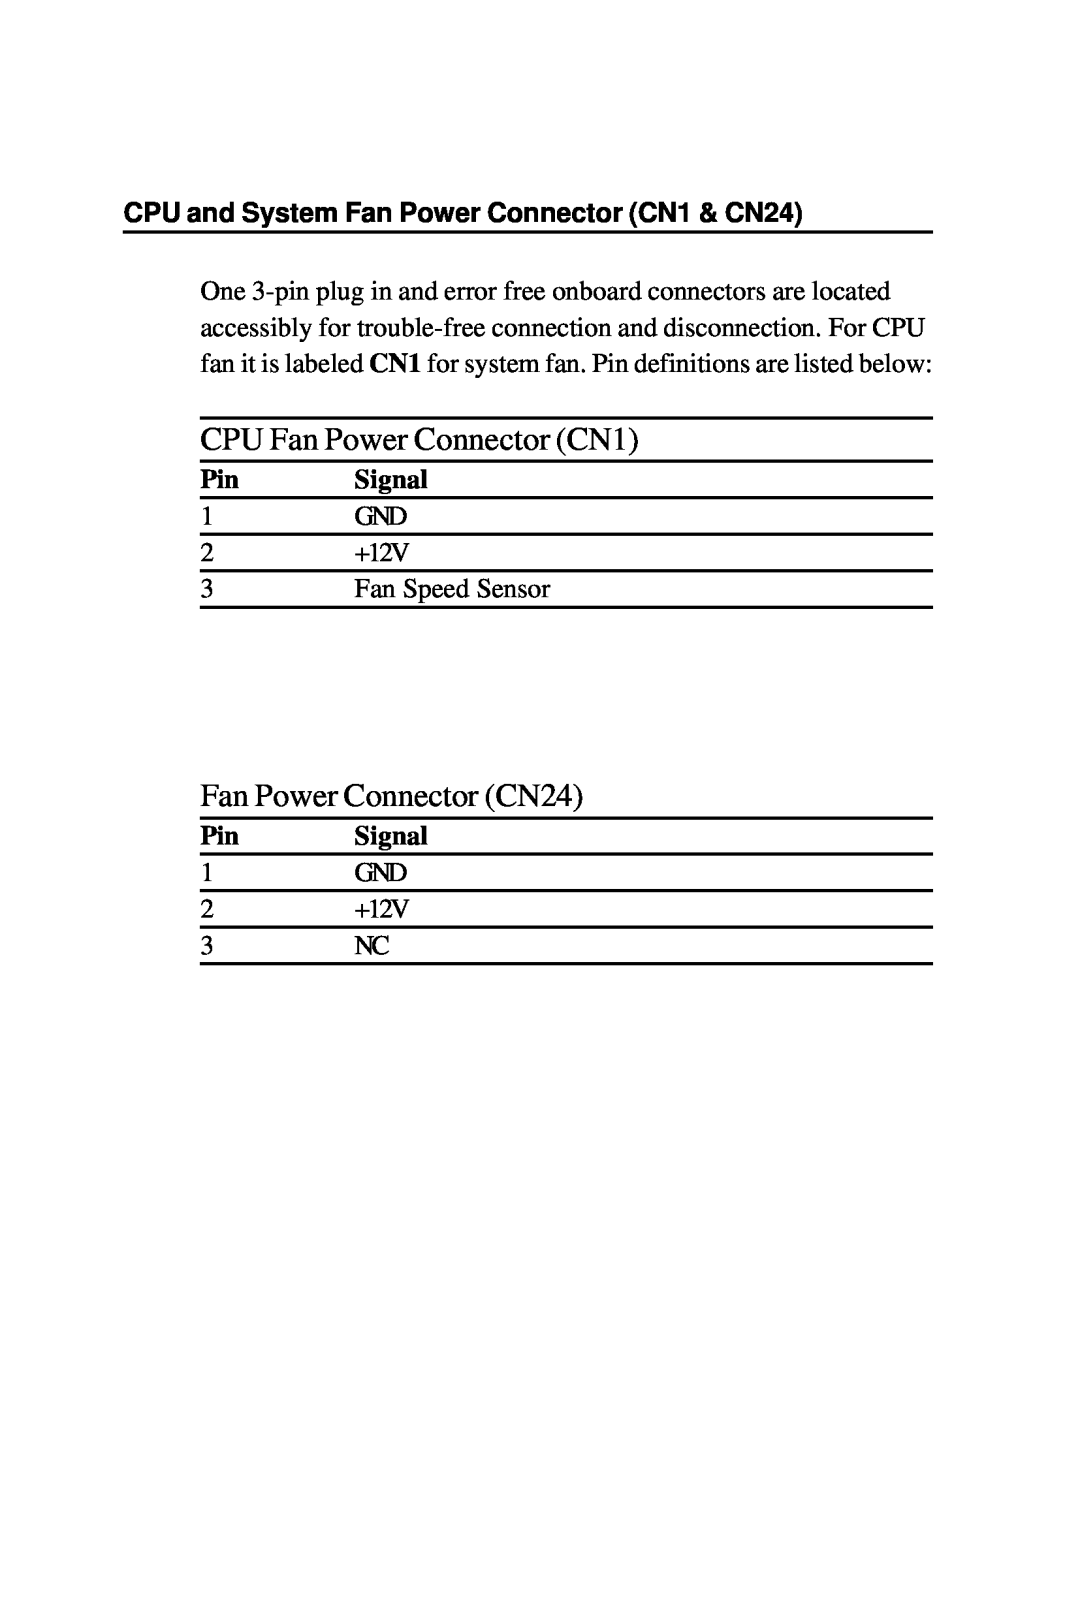 Intel PCM-6896 manual CPU Fan Power Connector CN1, Fan Power Connector CN24, CPU and System Fan Power Connector CN1 & CN24 